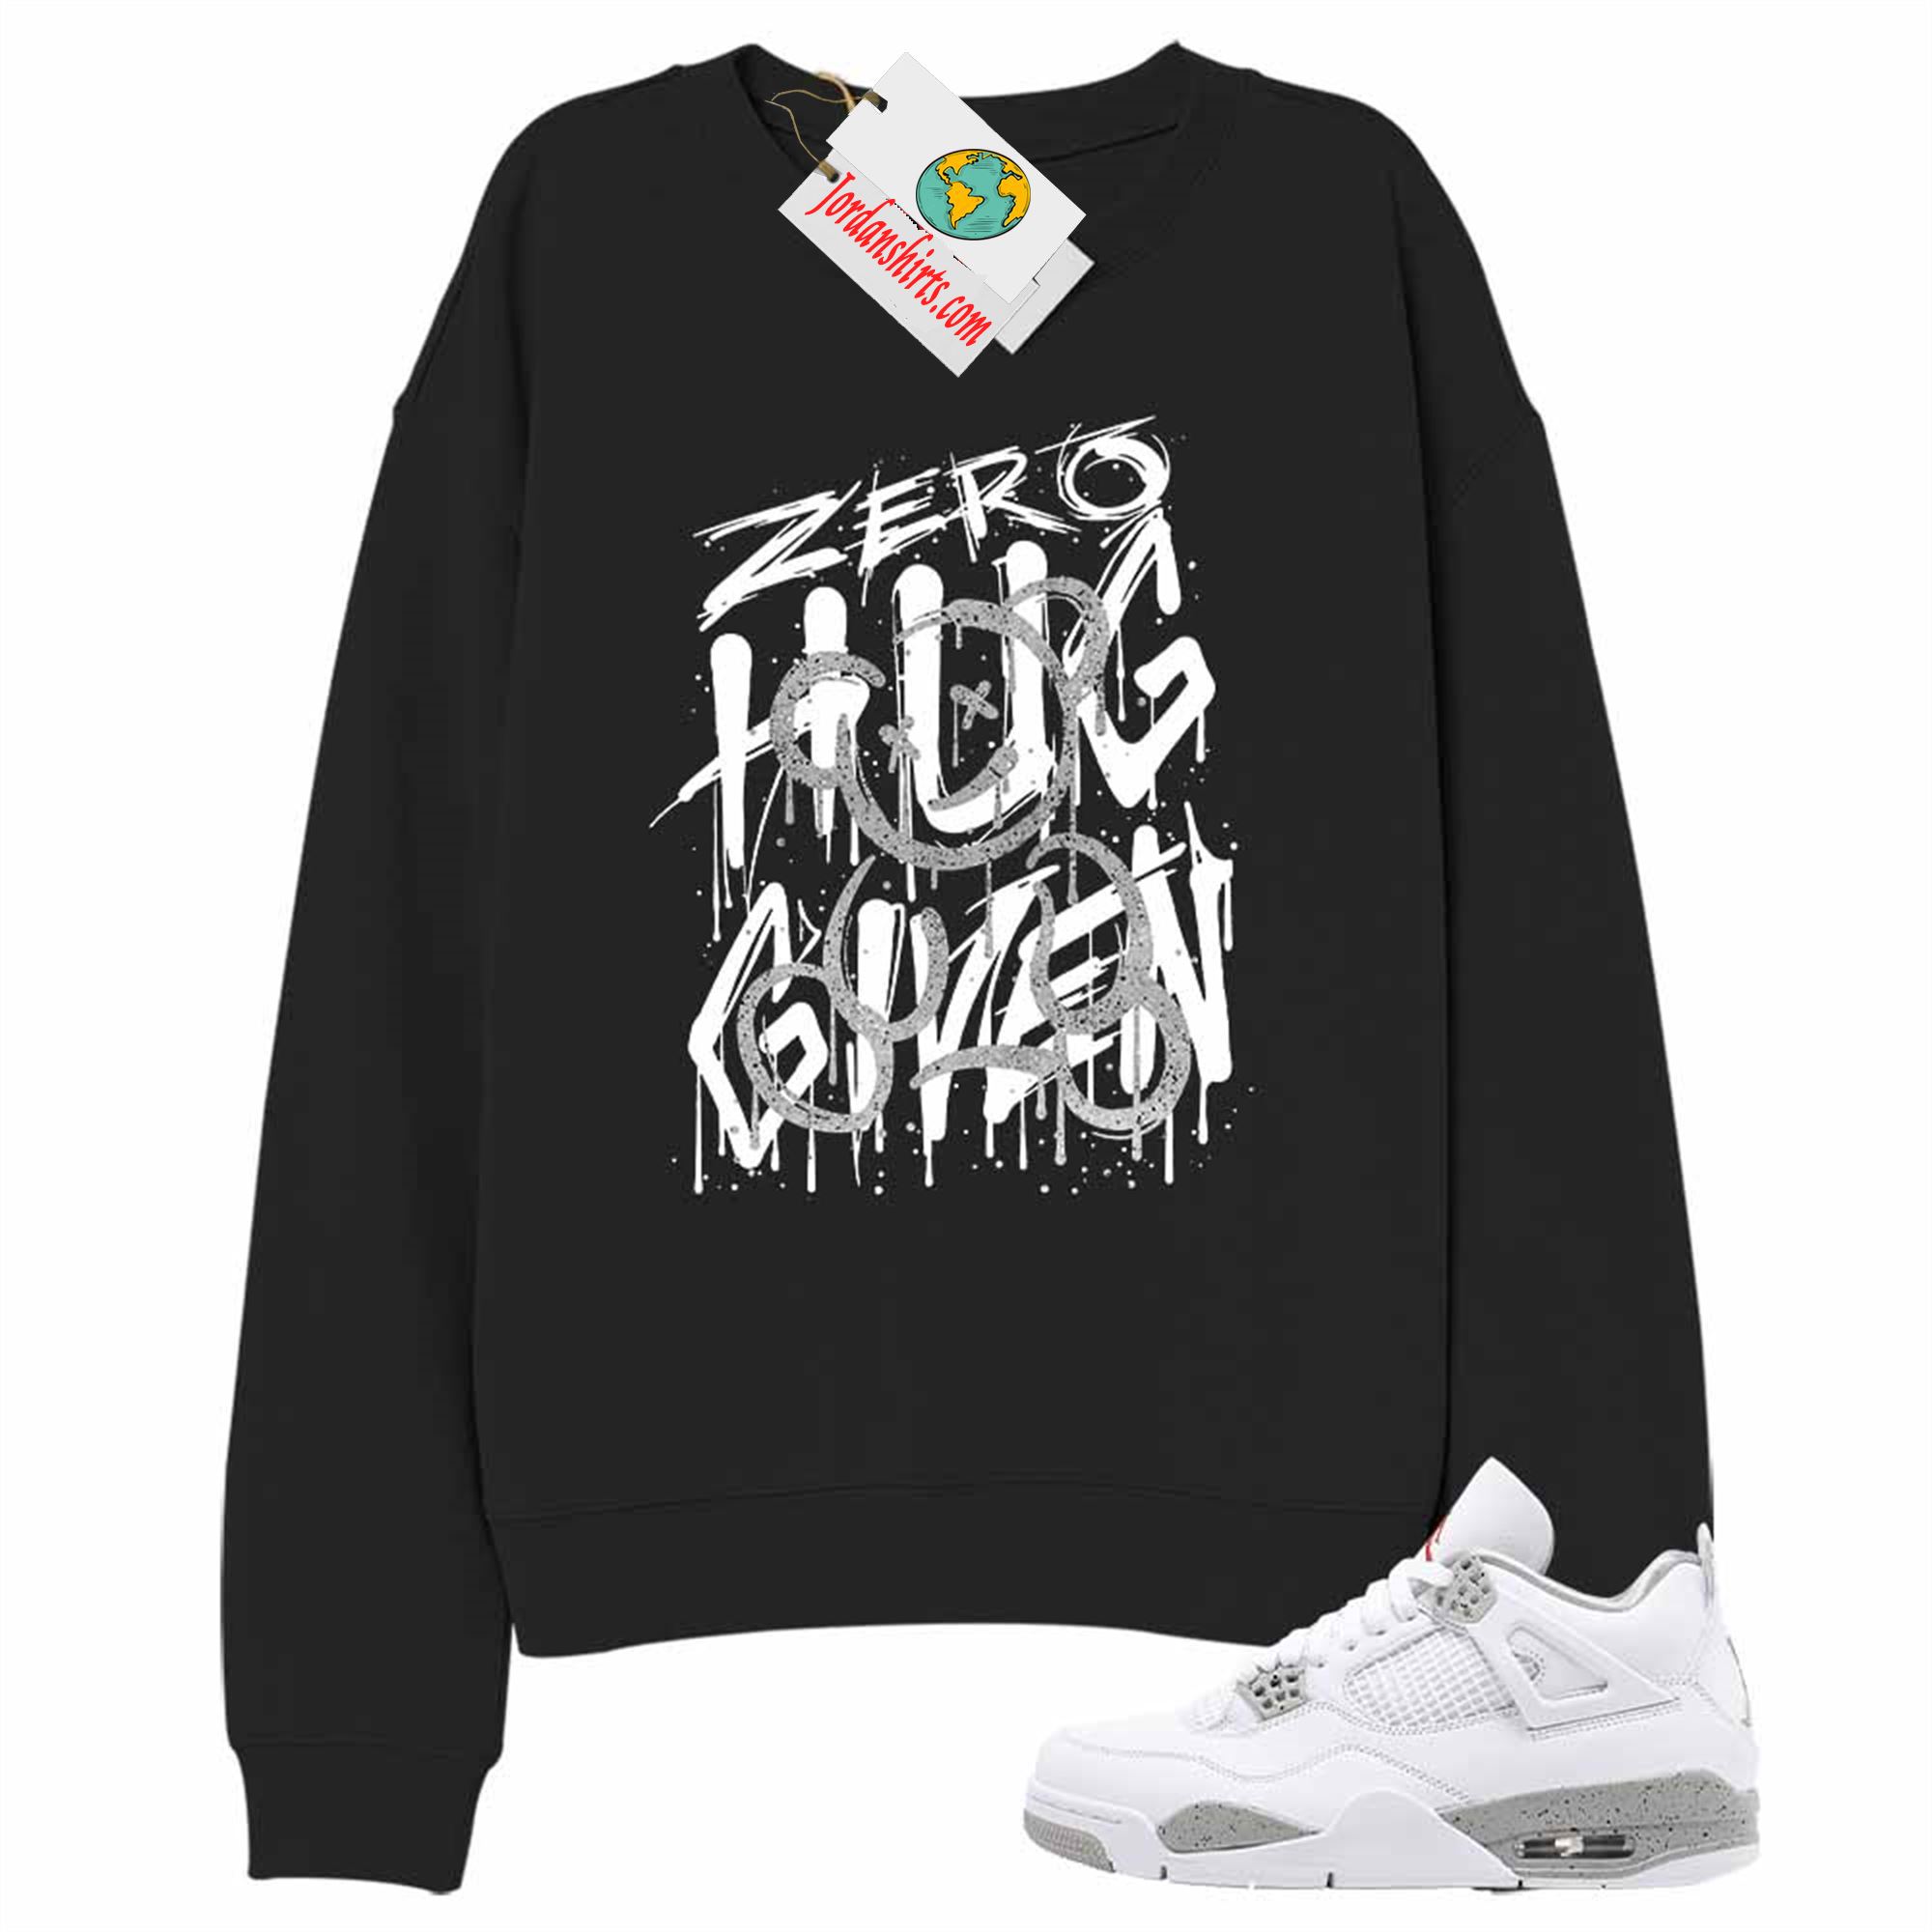 Jordan 4 Sweatshirt, Zero Hug Given Black Sweatshirt Air Jordan 4 White Oreo 4s Plus Size Up To 5xl